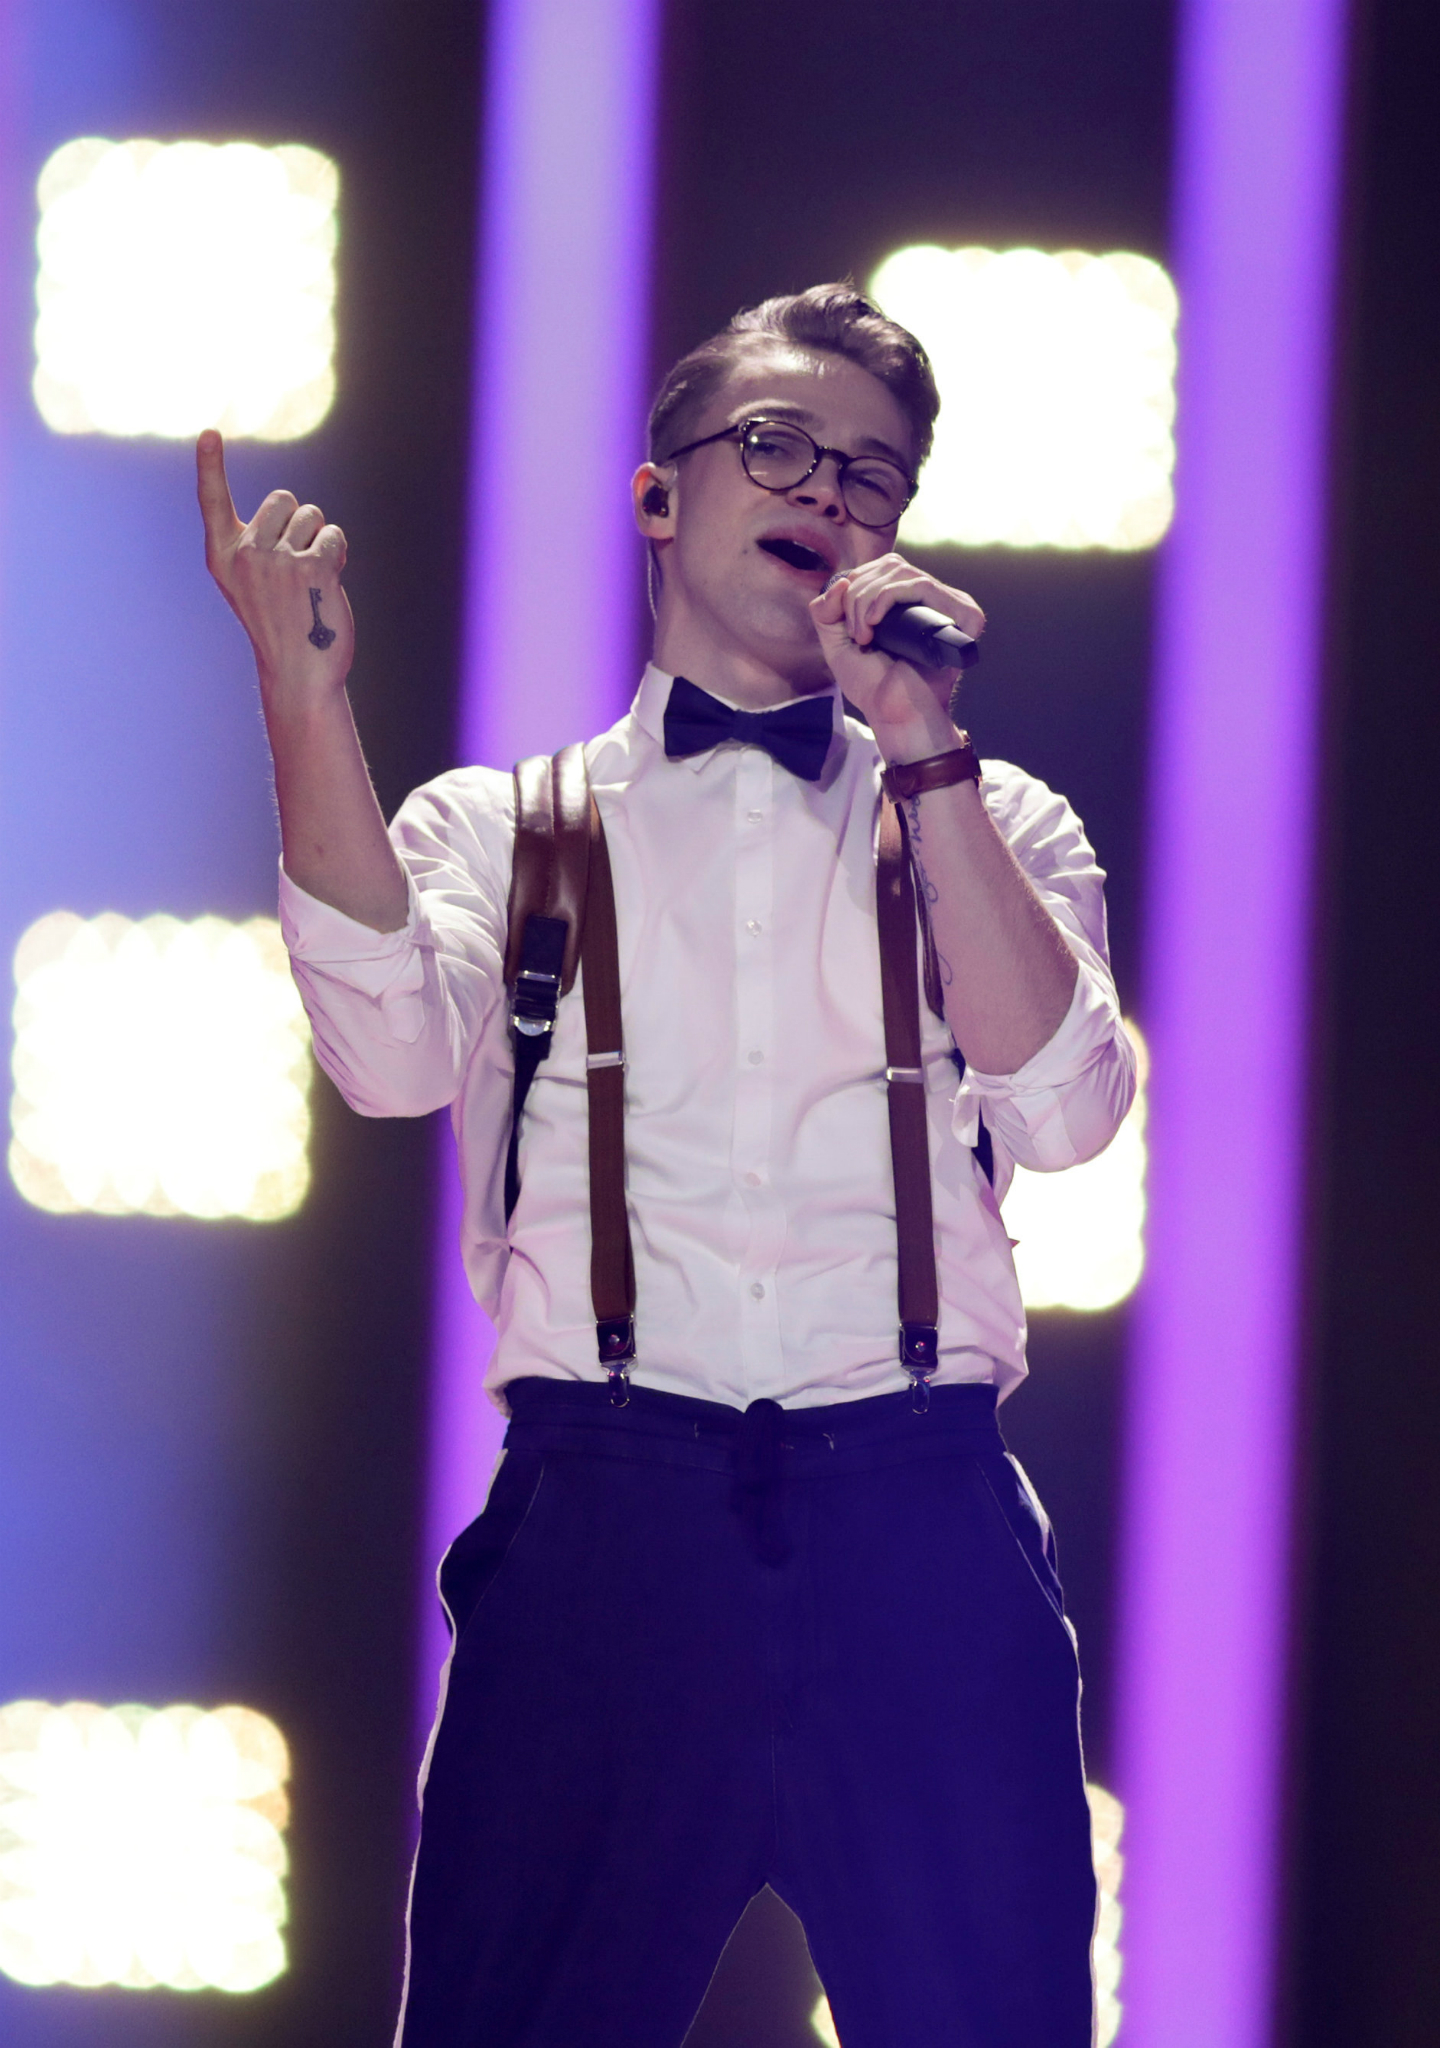 Mikolas representa a República Checa  en Eurovisión 2018 con la canción 